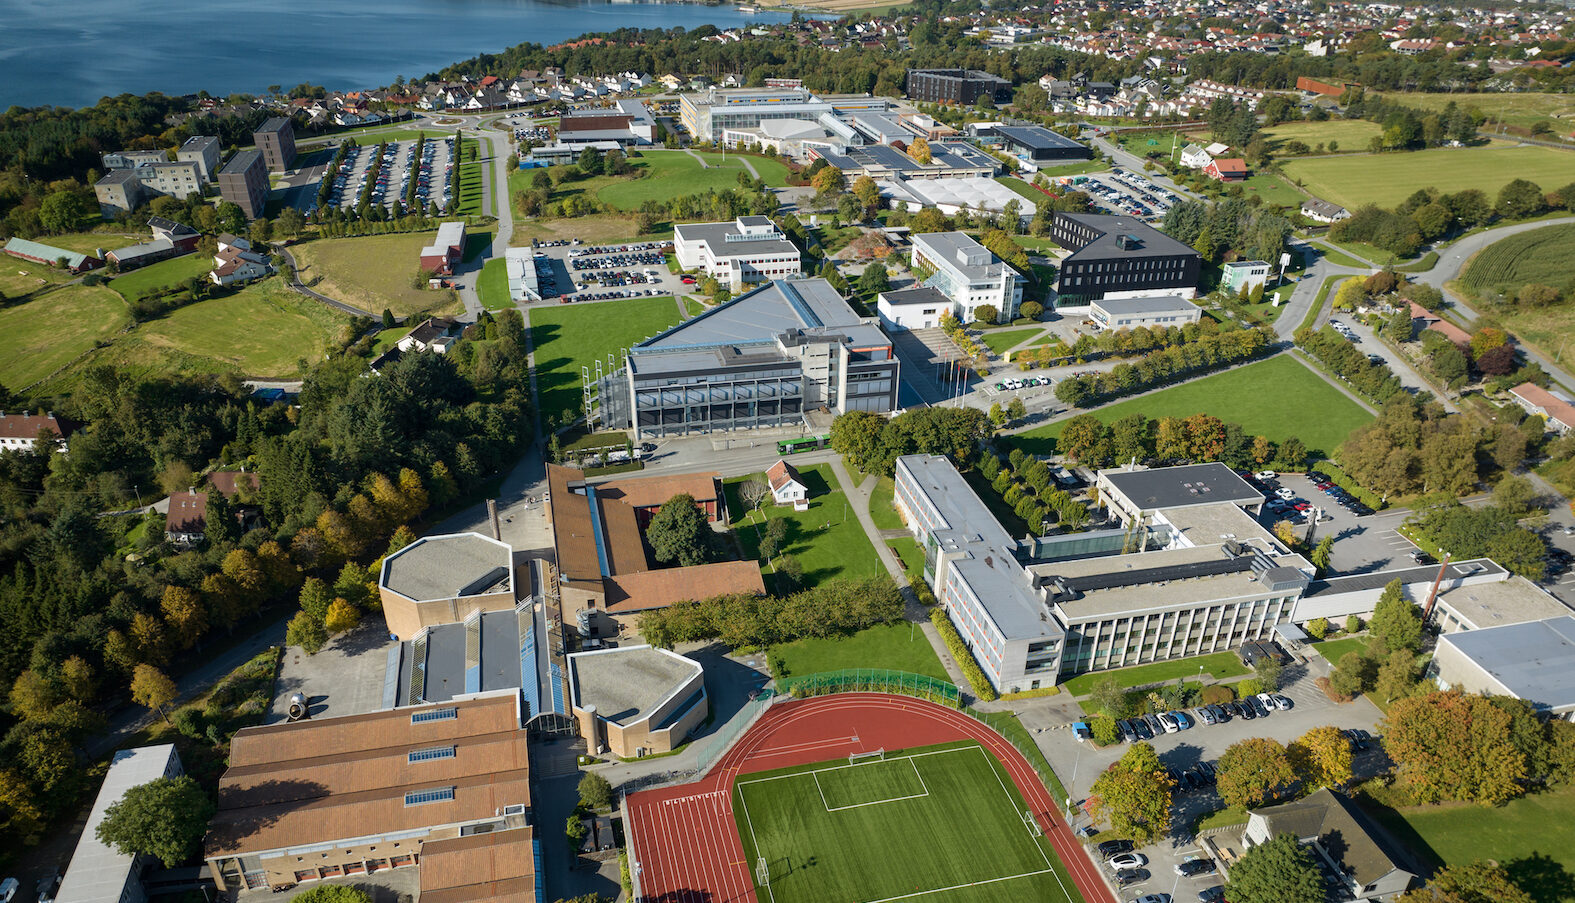 University of Stavanger - 12.000+ students